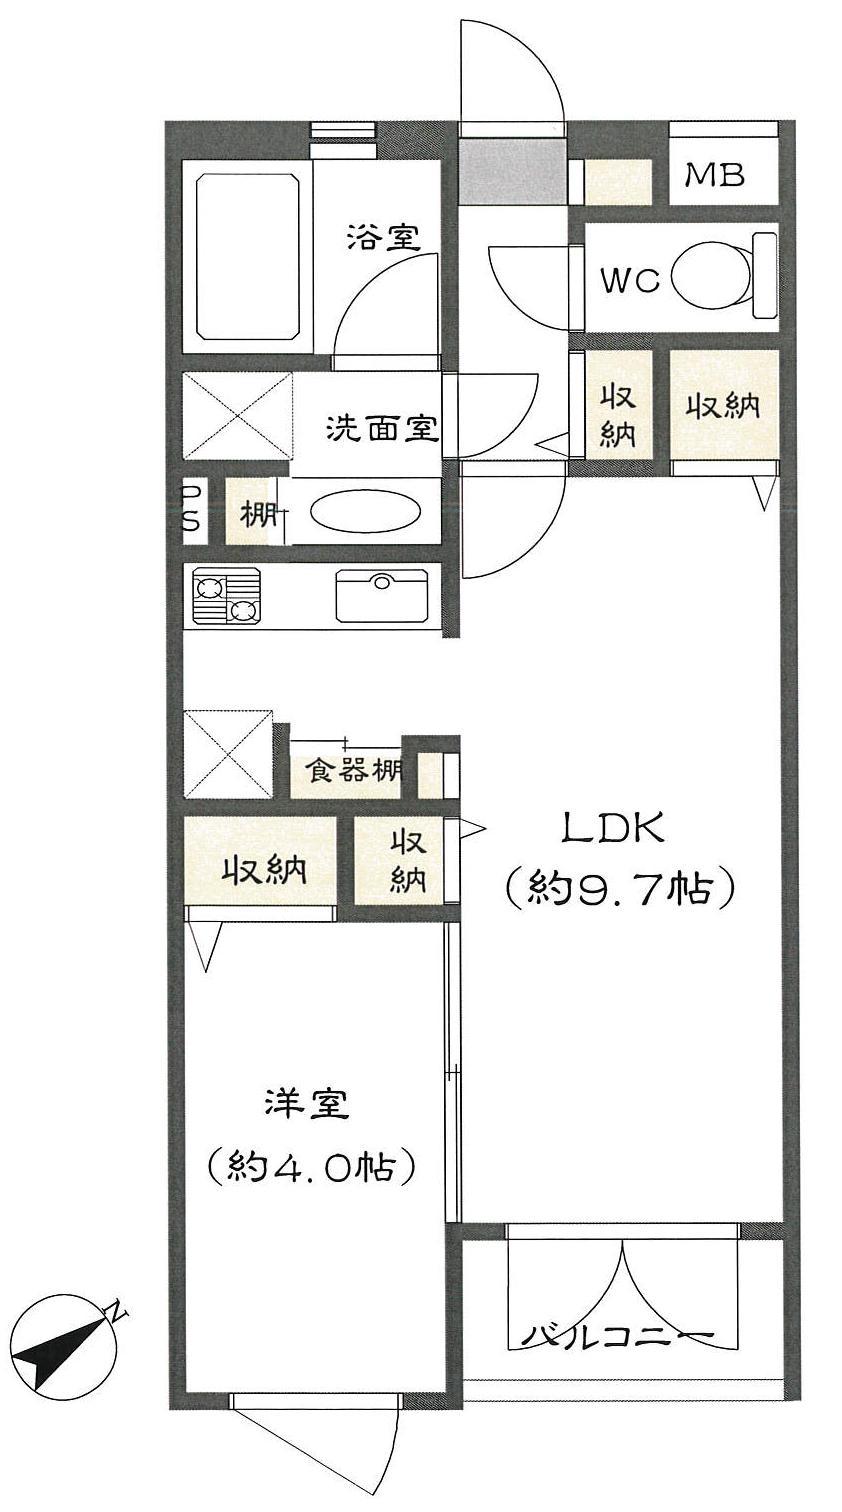 Floor plan. 1LDK, Price 19 million yen, Occupied area 35.46 sq m , Balcony area 3.22 sq m